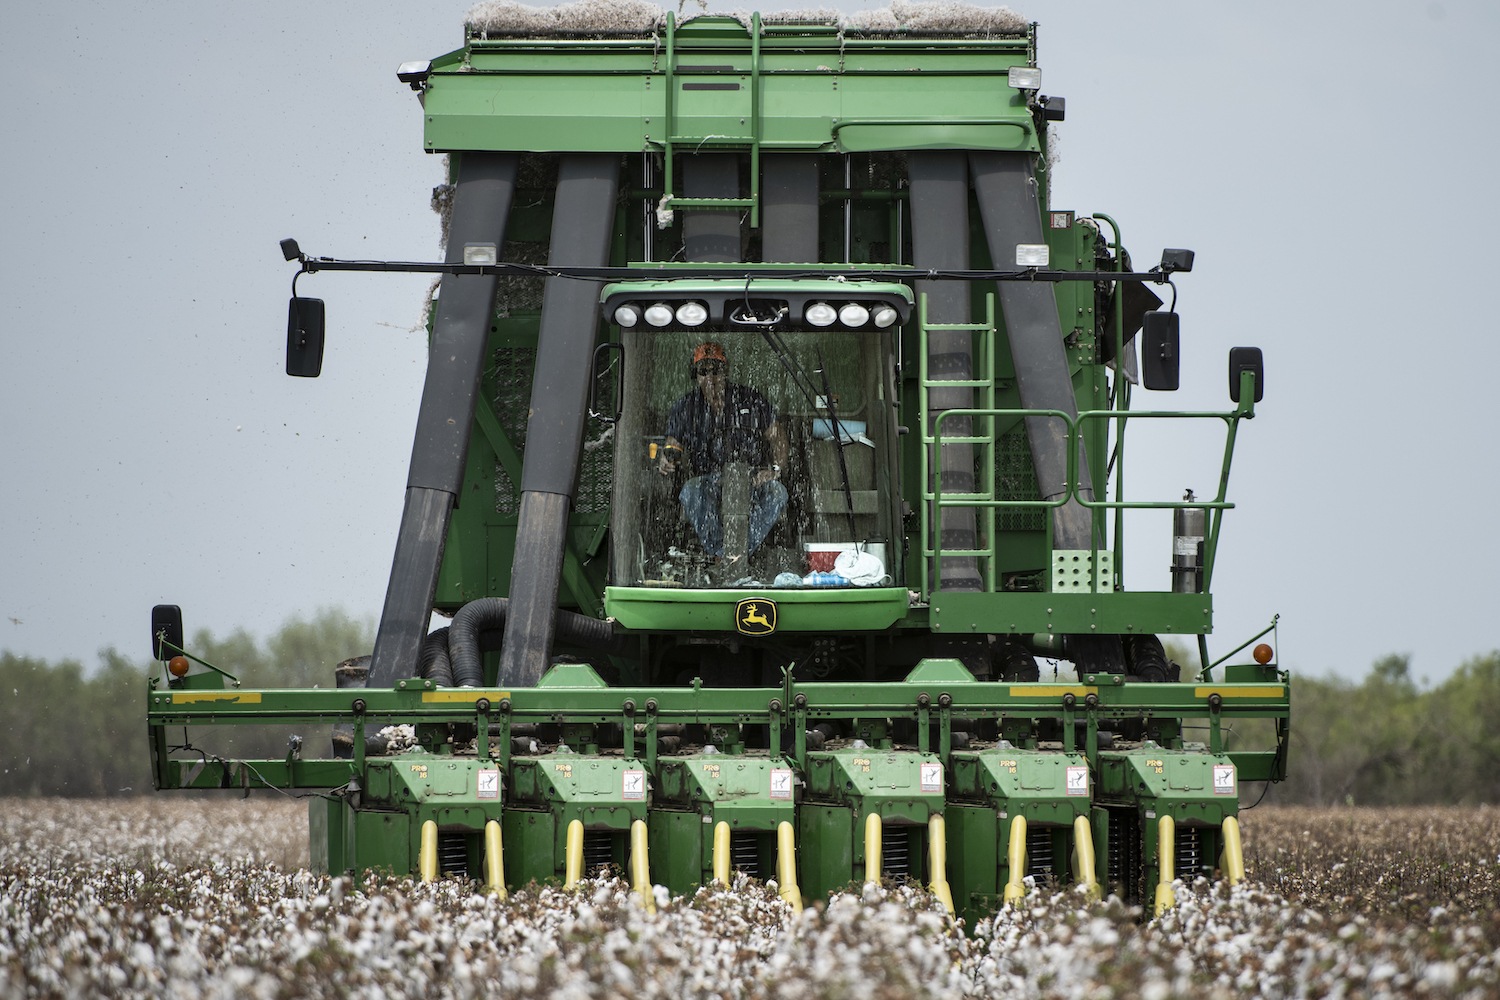 cotton harvesting in Batesville, TX, on August 22, 2020.